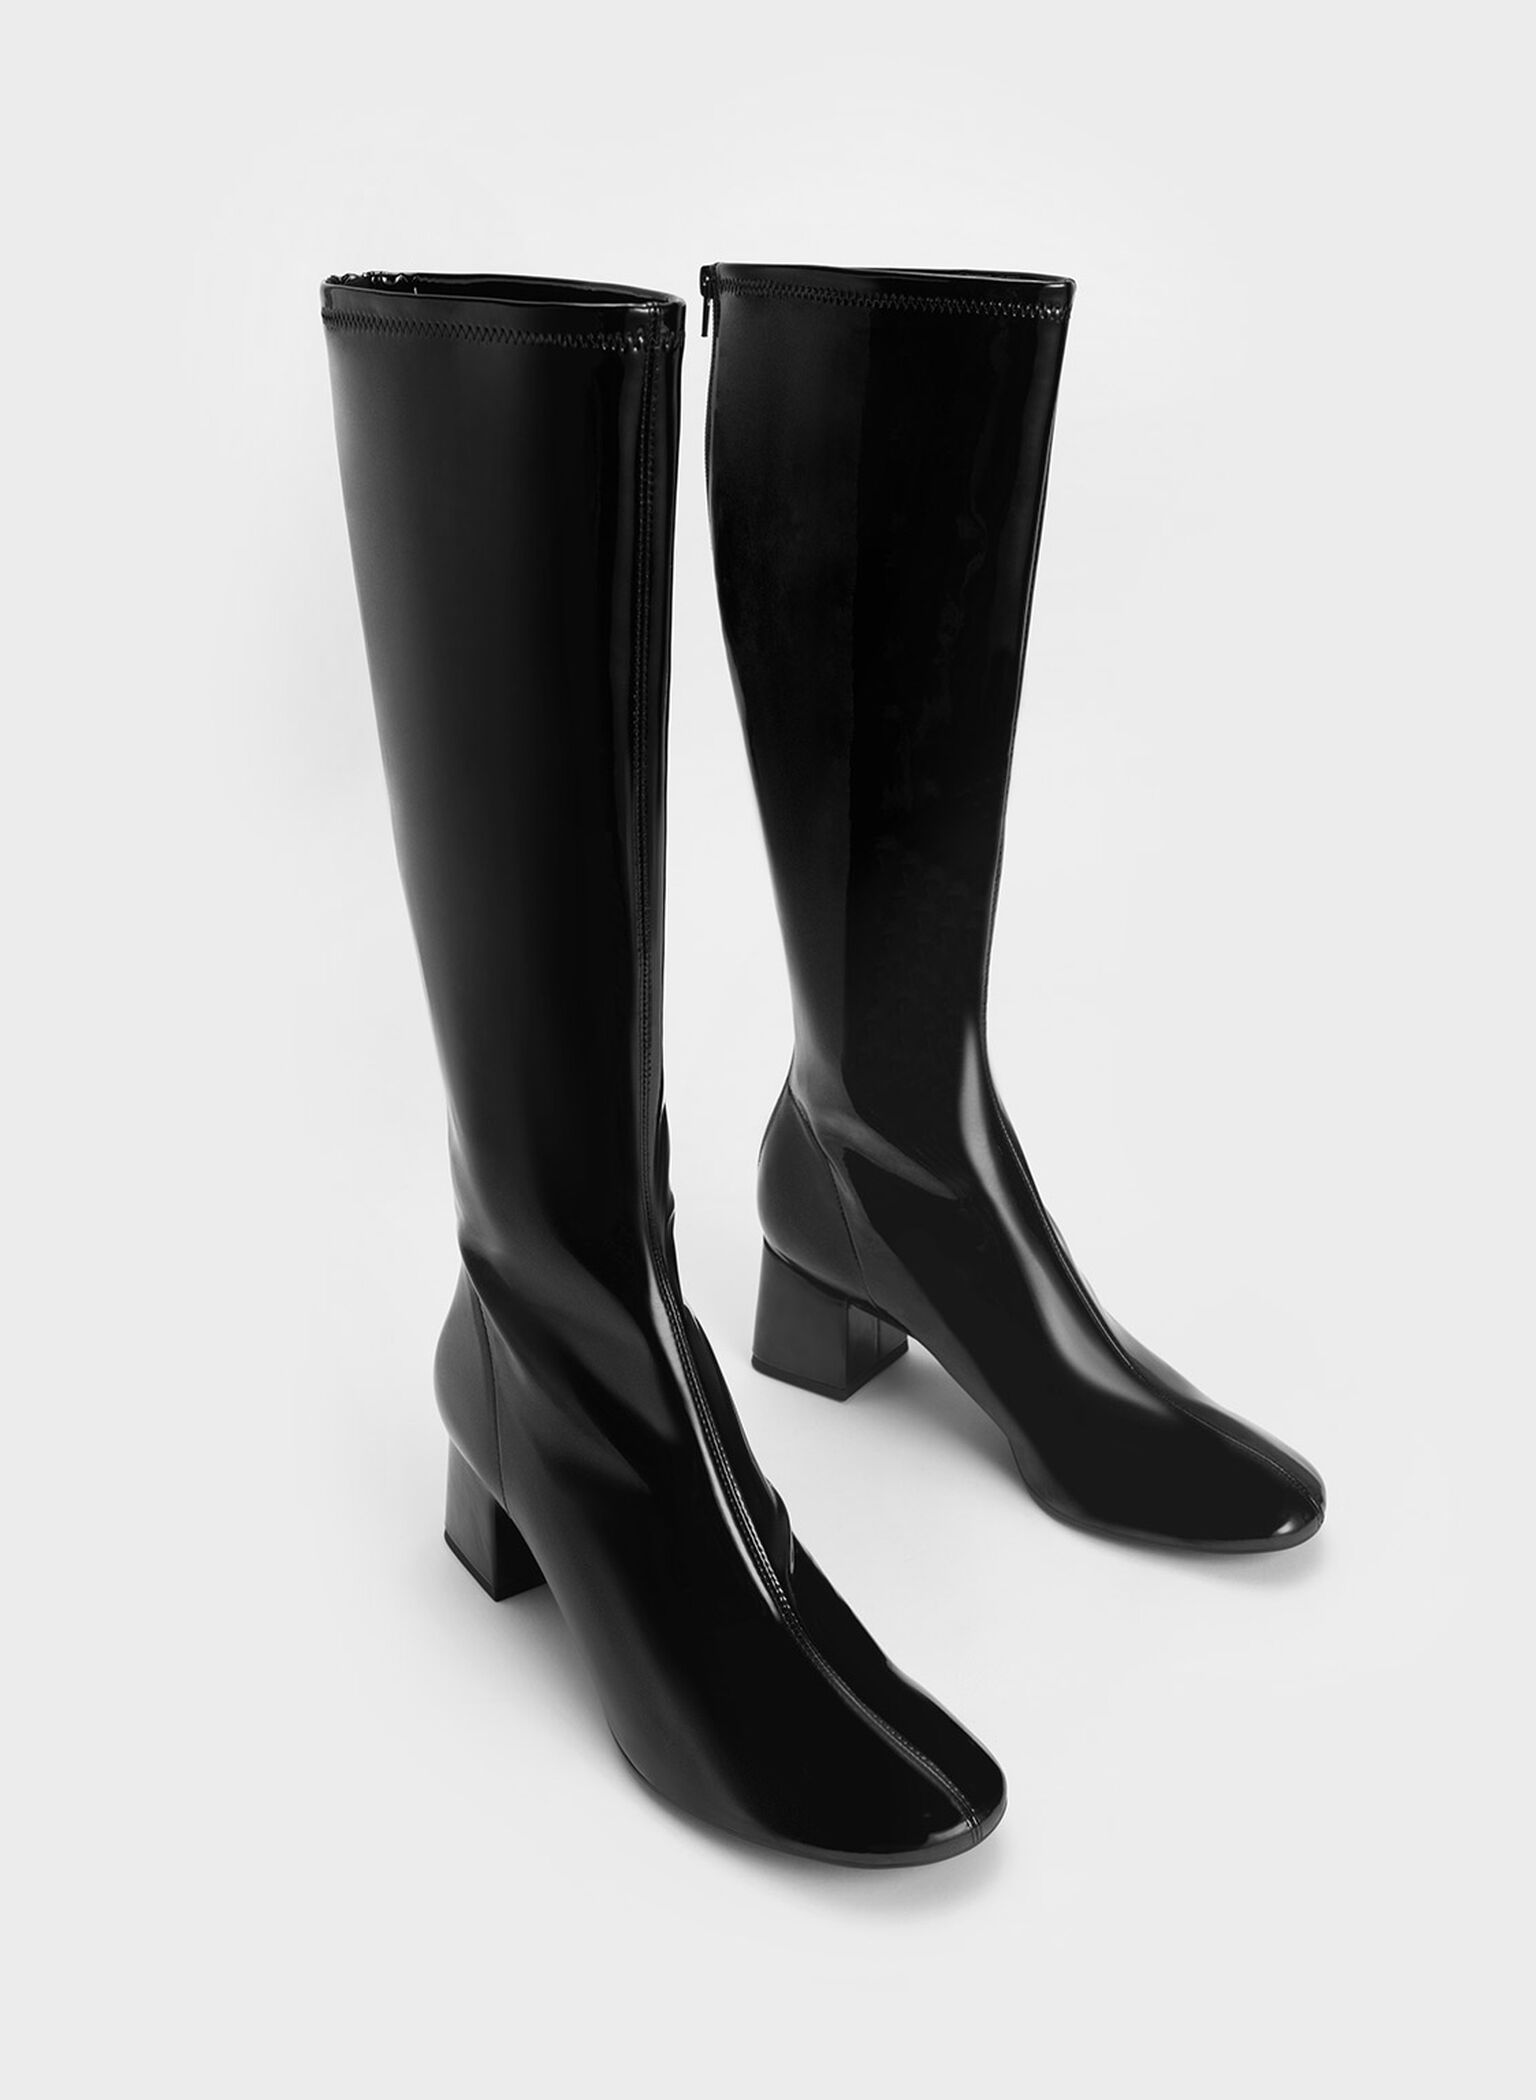 Black Patent Patent Block Heel Knee Boots - CHARLES & KEITH UK